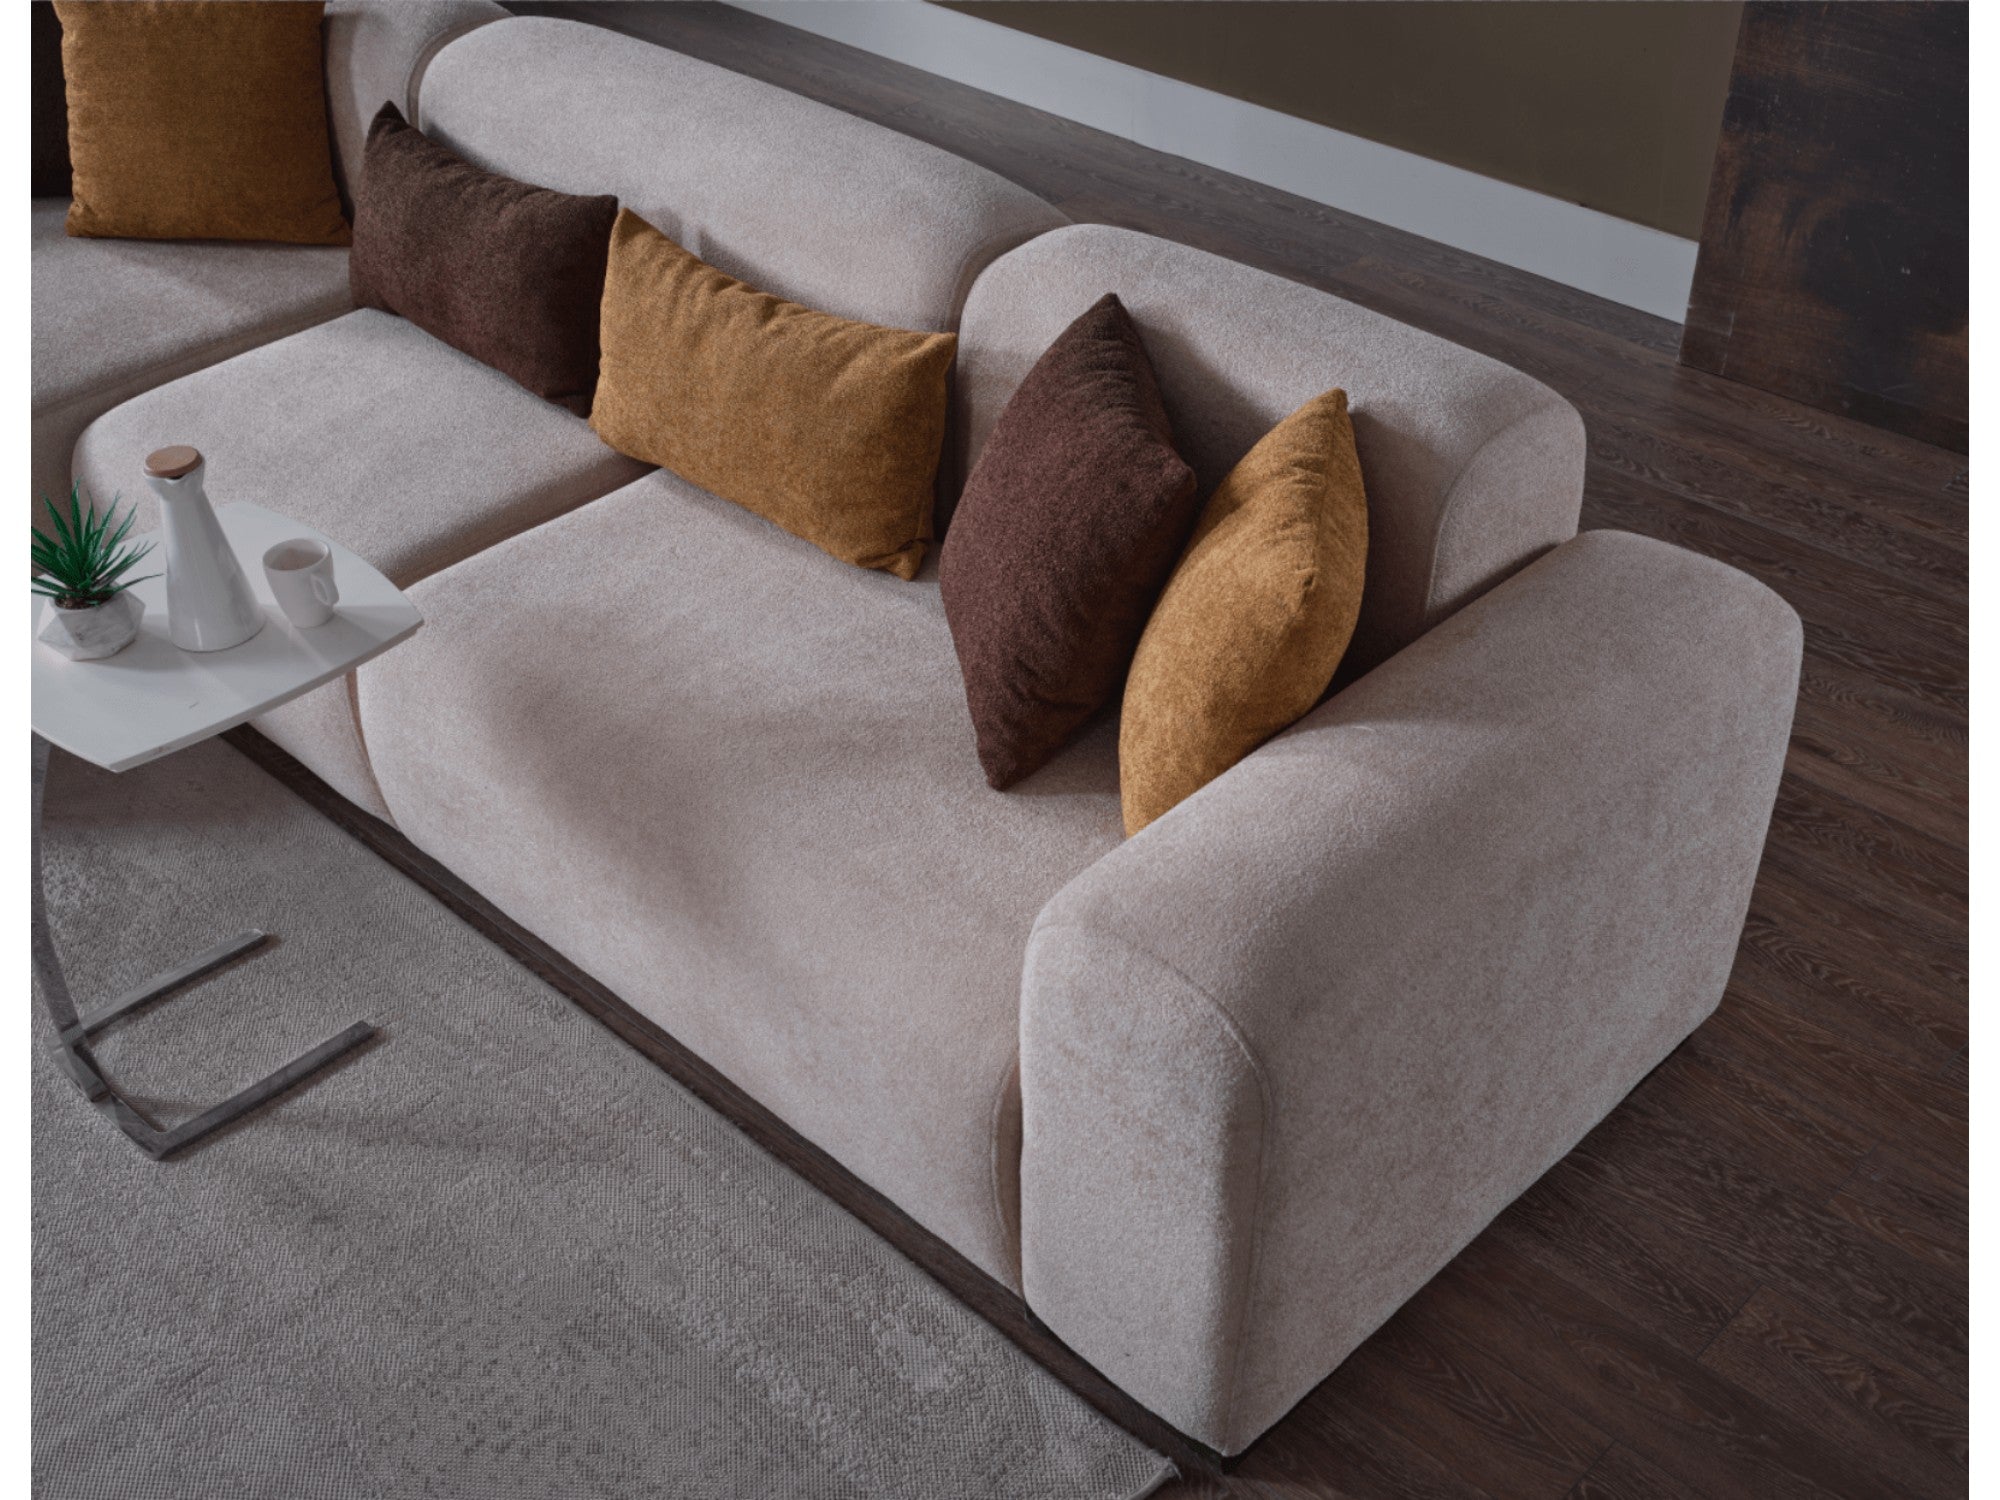 Monza Convertible Livingroom Set (2 Sofa & 2 Chair)